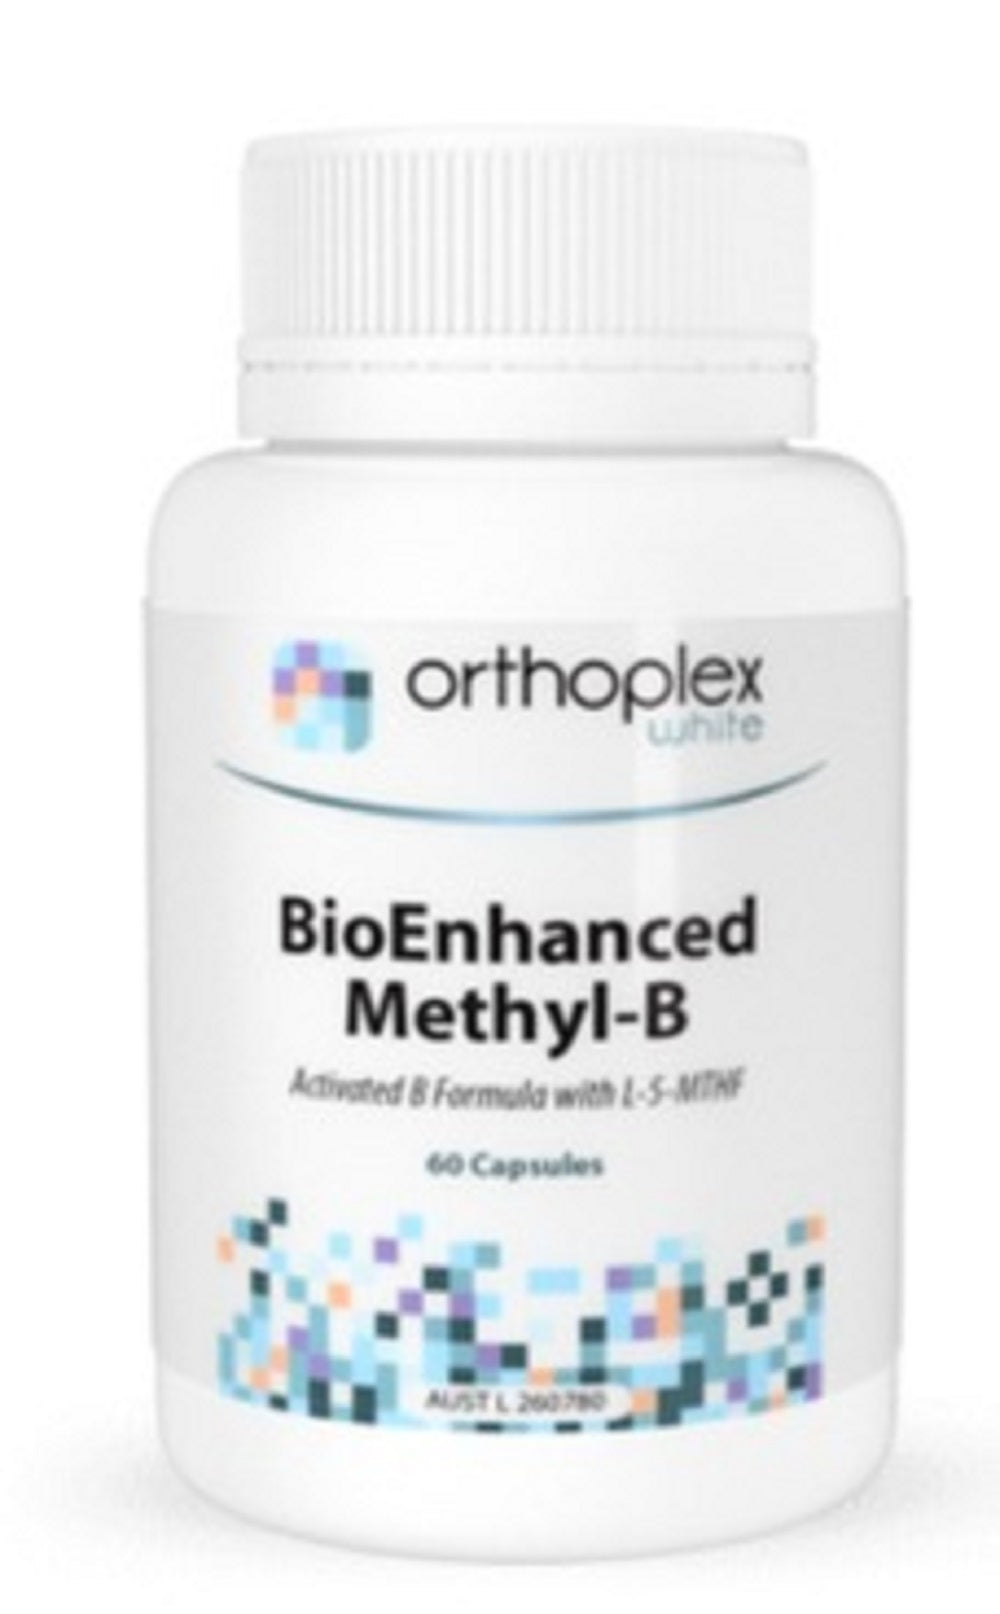 Orthoplex White BioEnhanced Methyl-B 60 Capsules